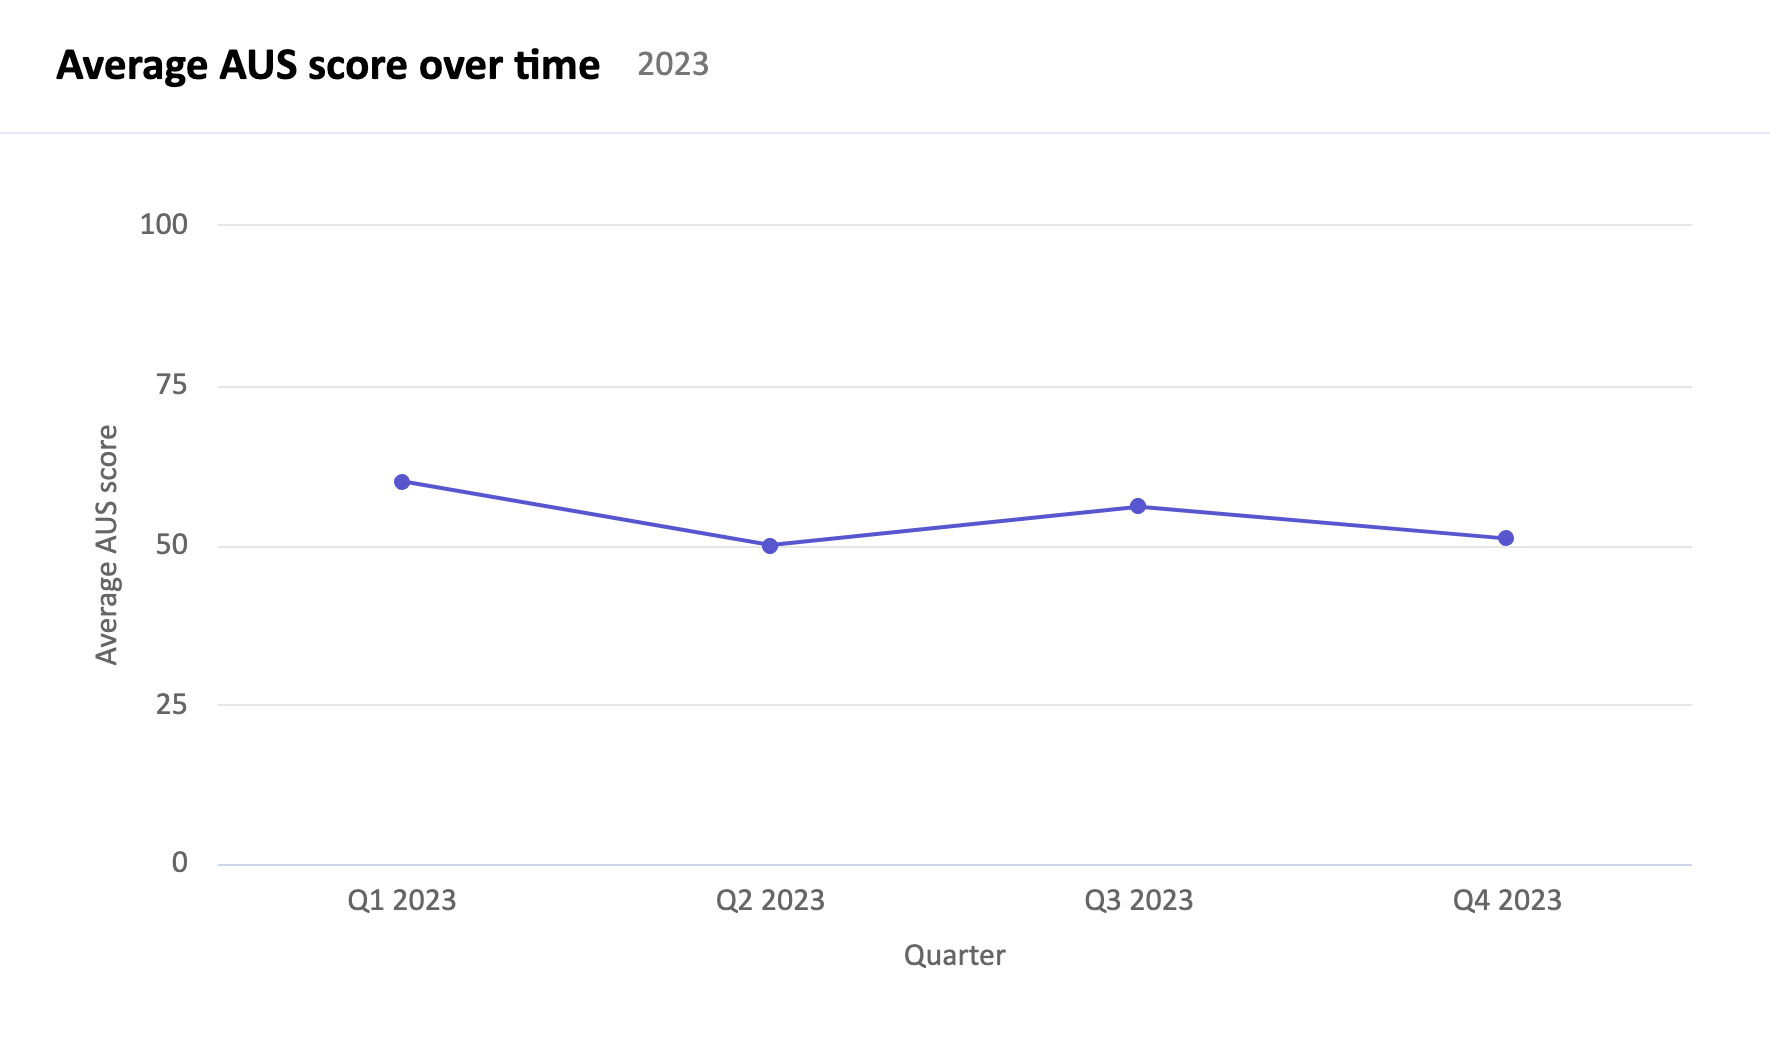 Line chart titled Average AUS score over time. Shows average AUS score each quarter for 2023.